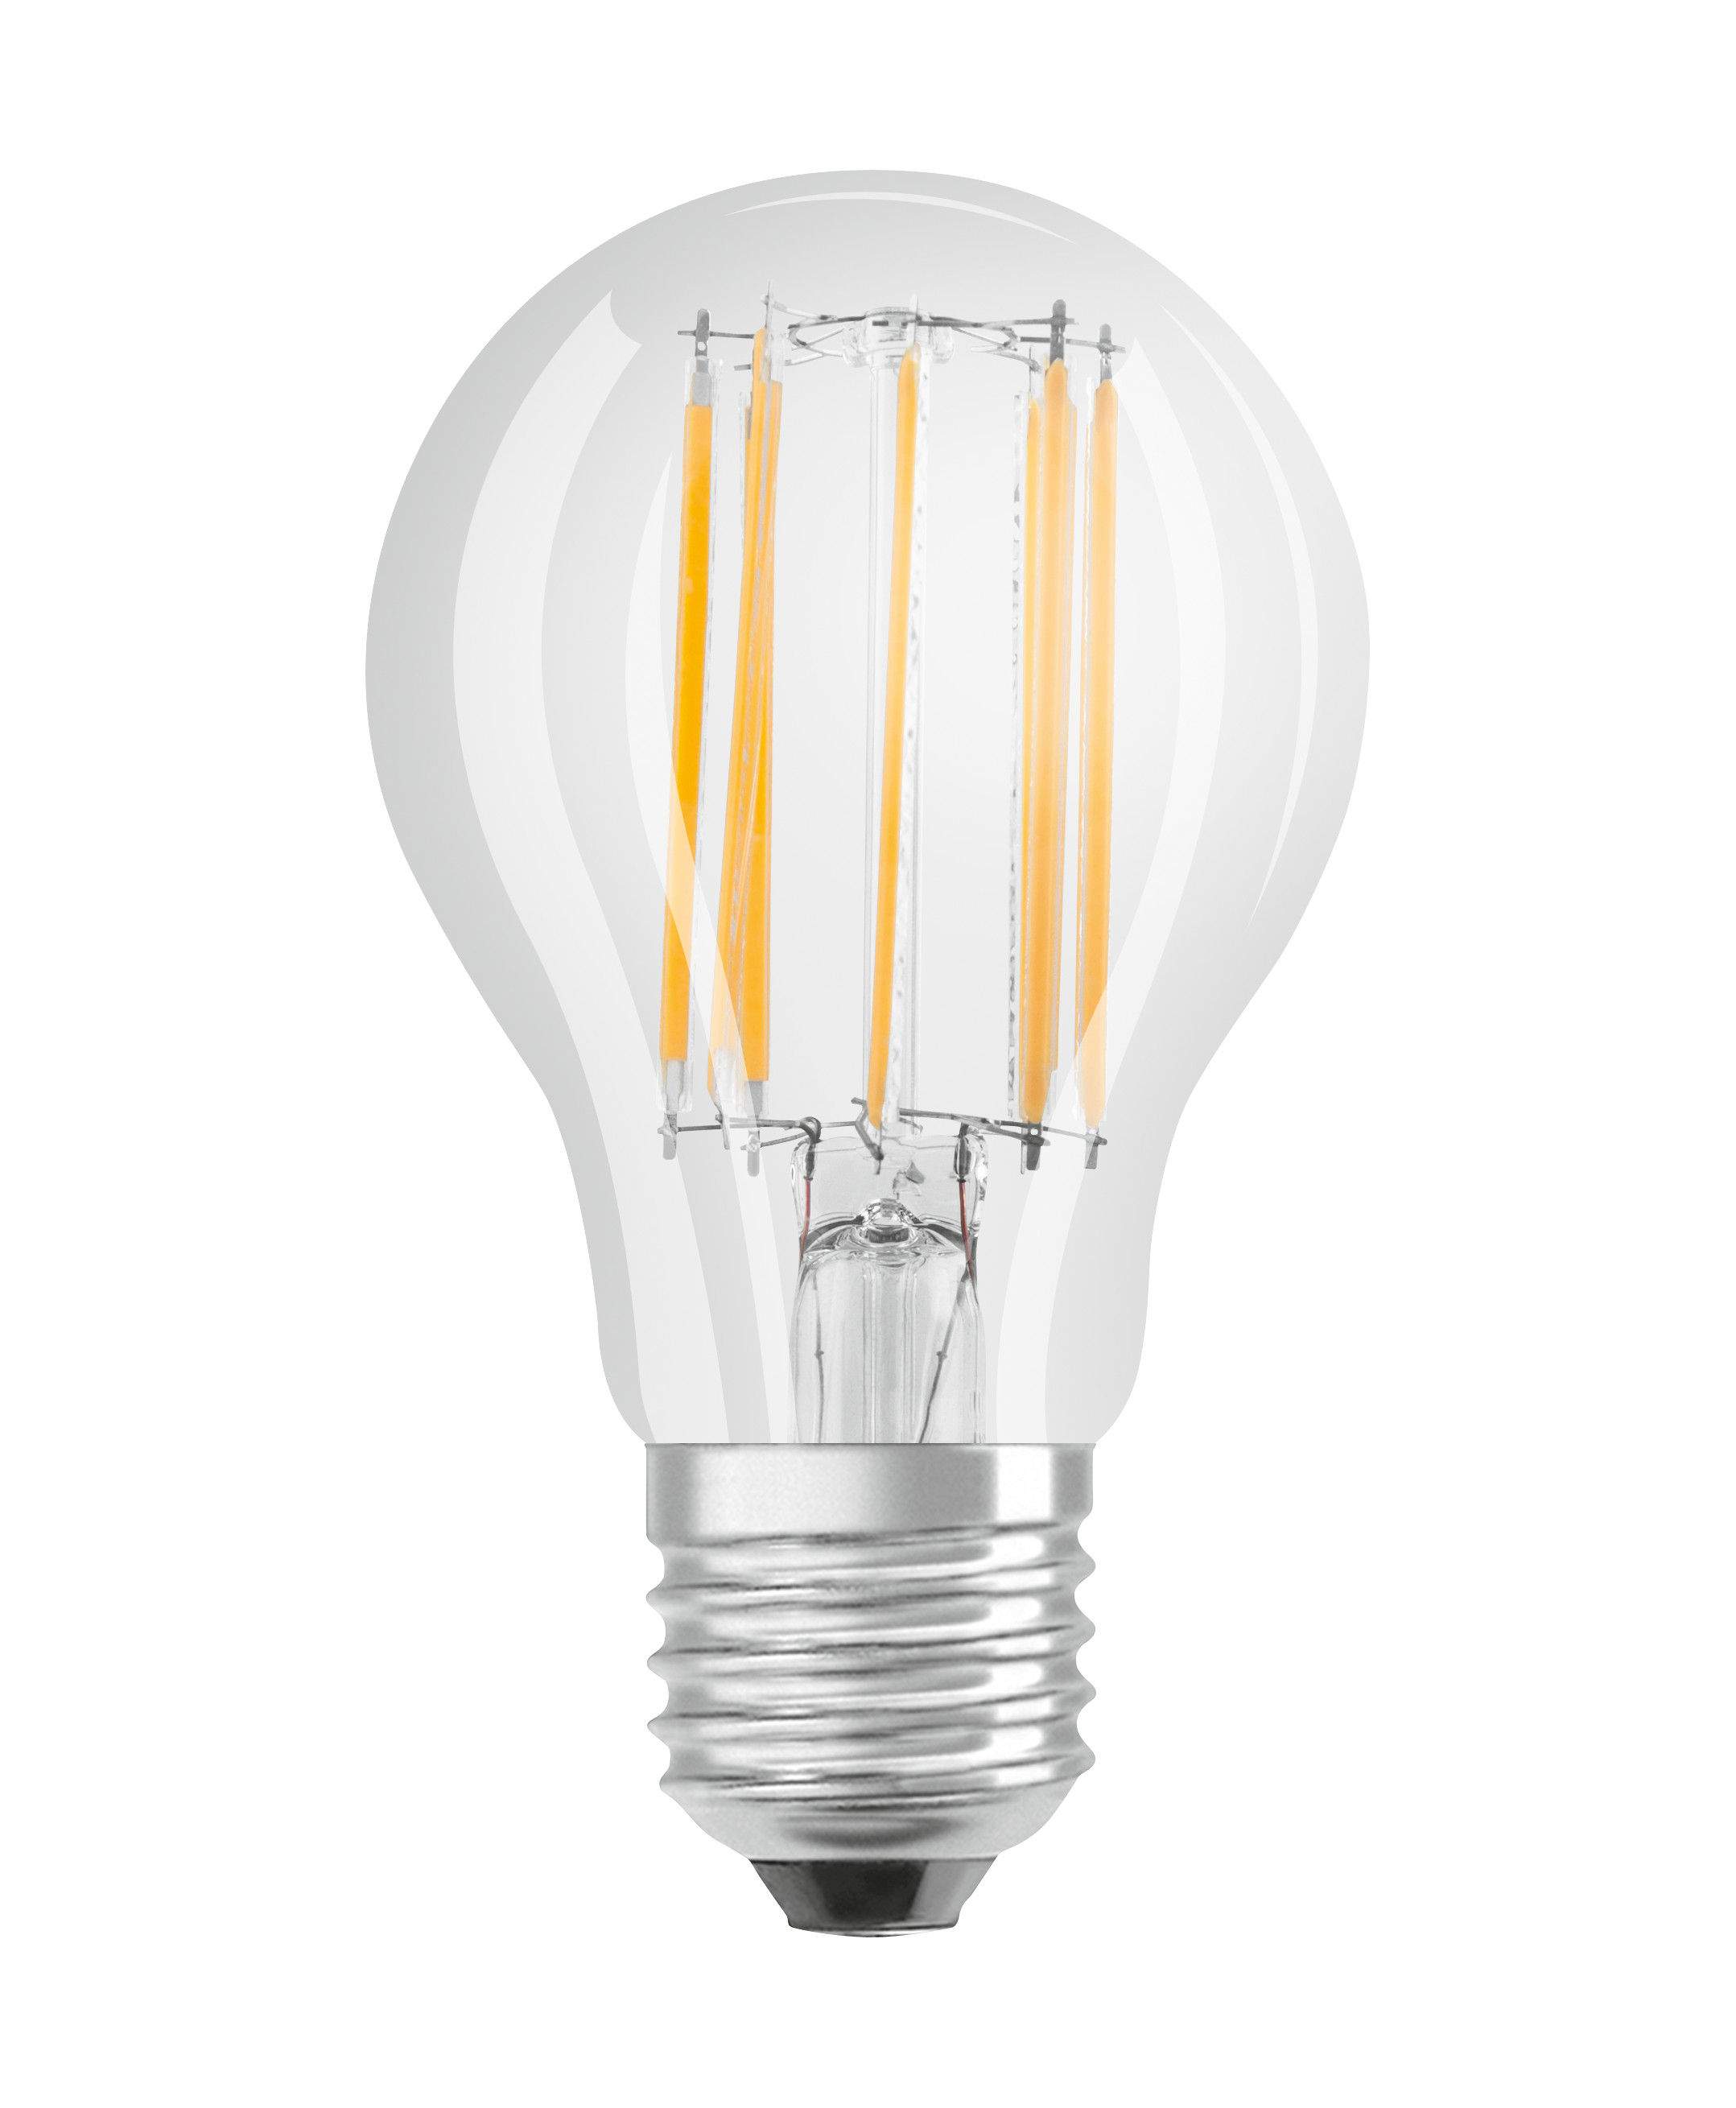 E27 standard clear glass LED bulb, 11W, warm white.